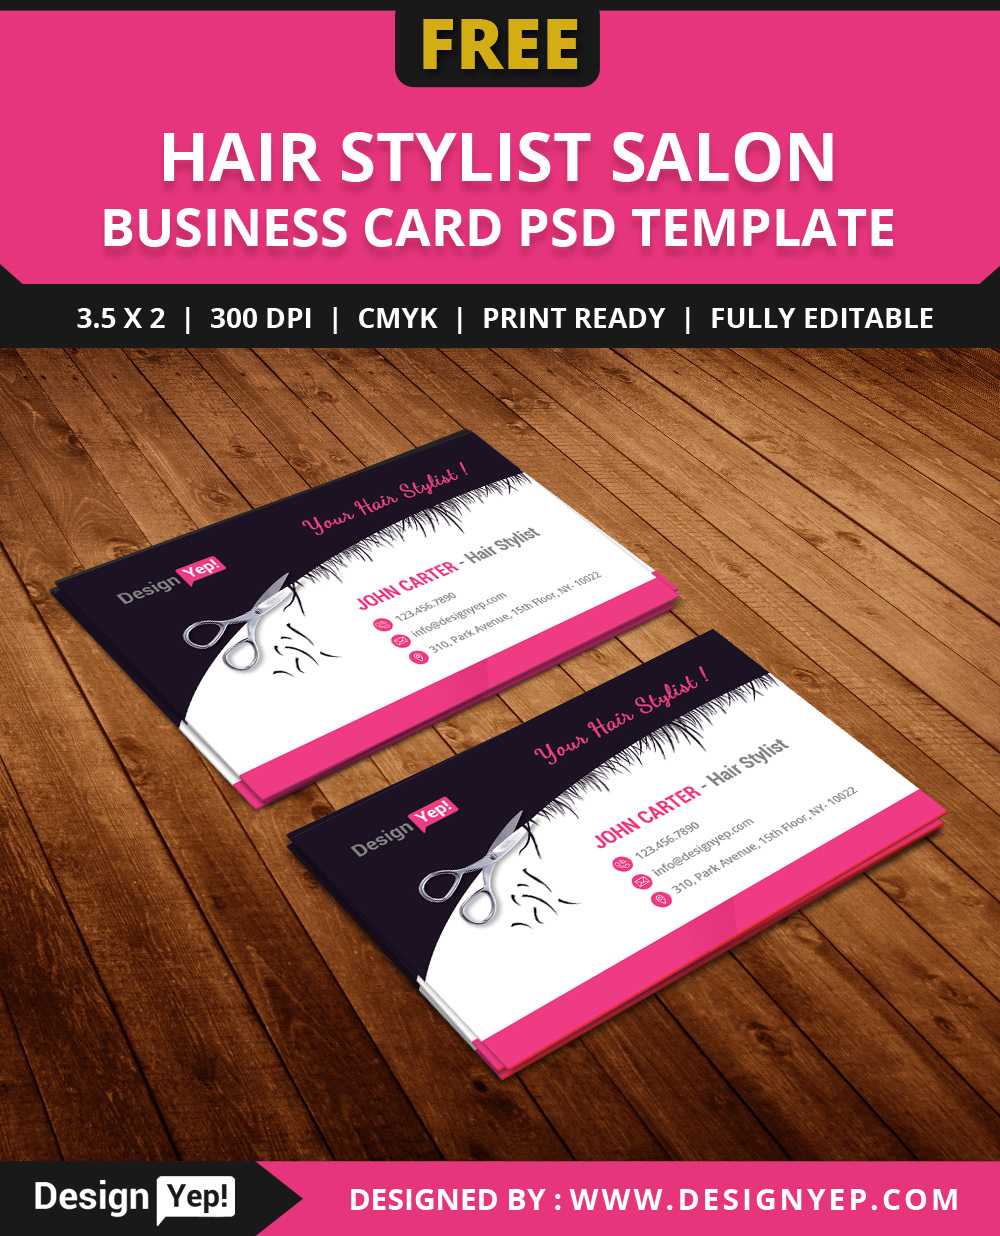 Free Hair Stylist Salon Business Card Template Psd On Behance With Regard To Hair Salon Business Card Template